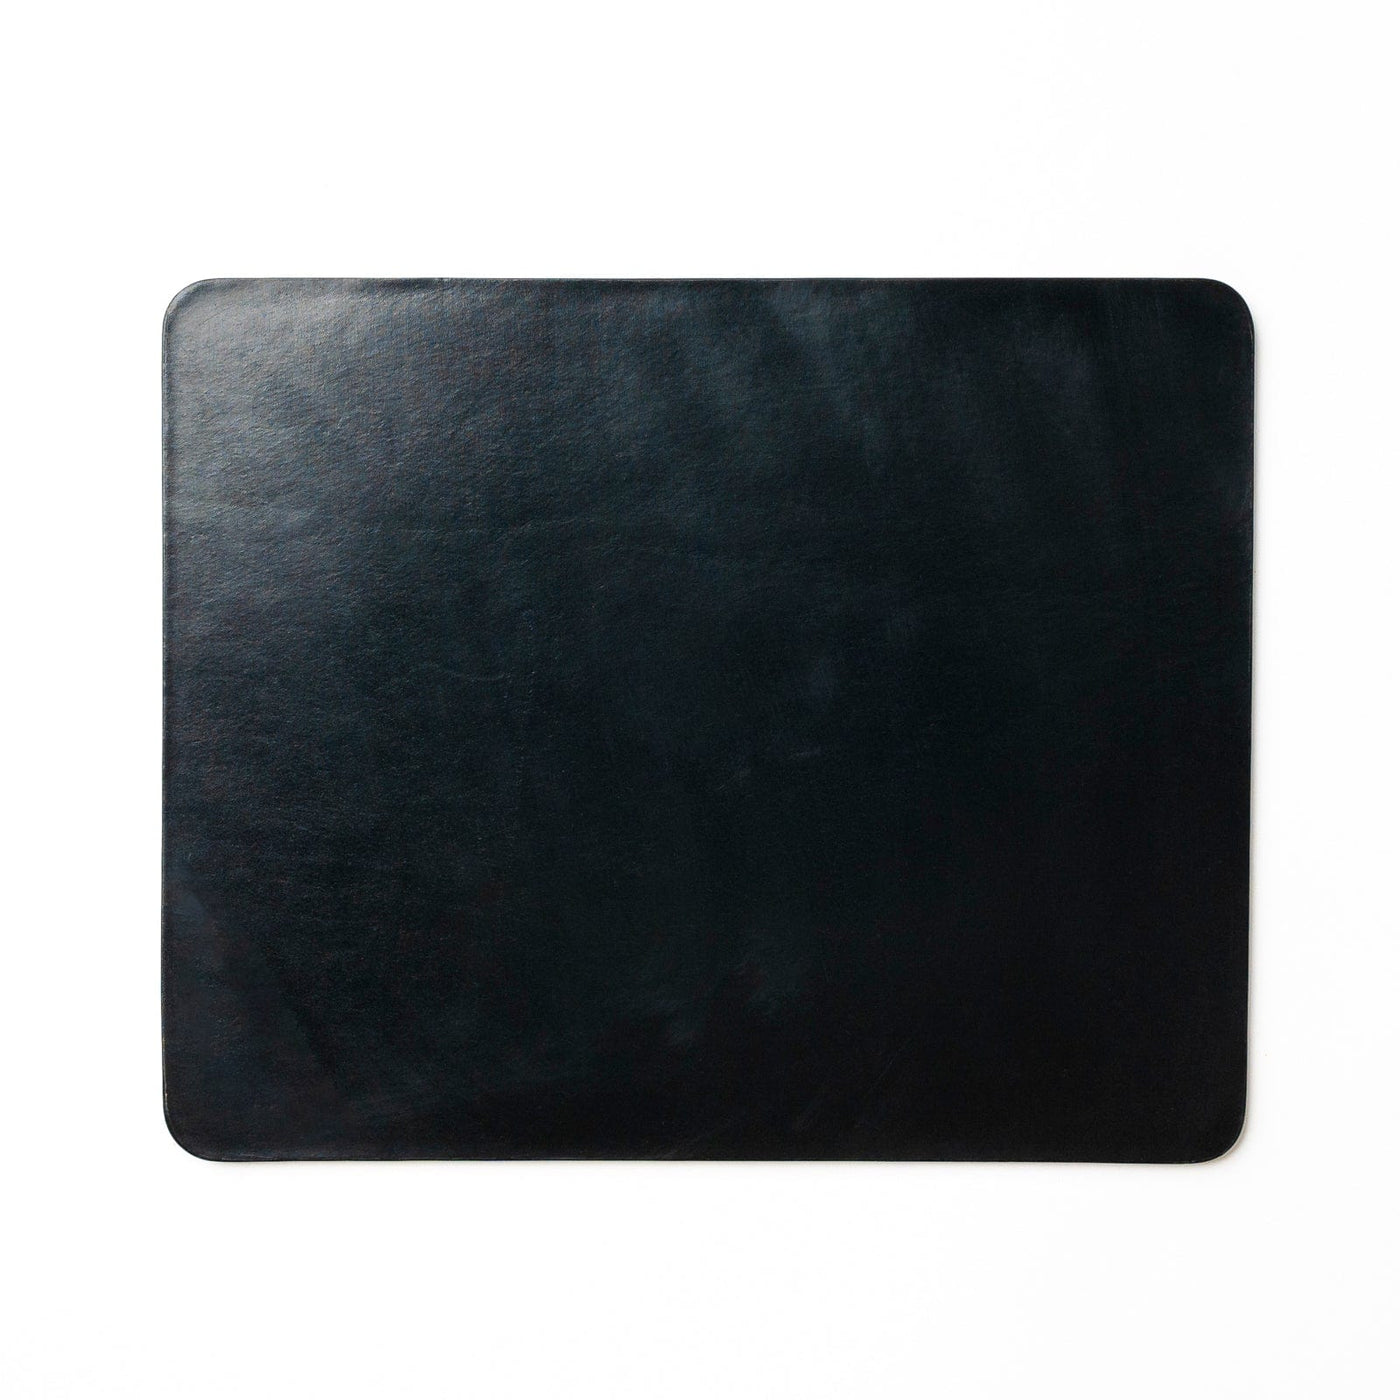 Leather Mouse Pad - Black Popov Leather